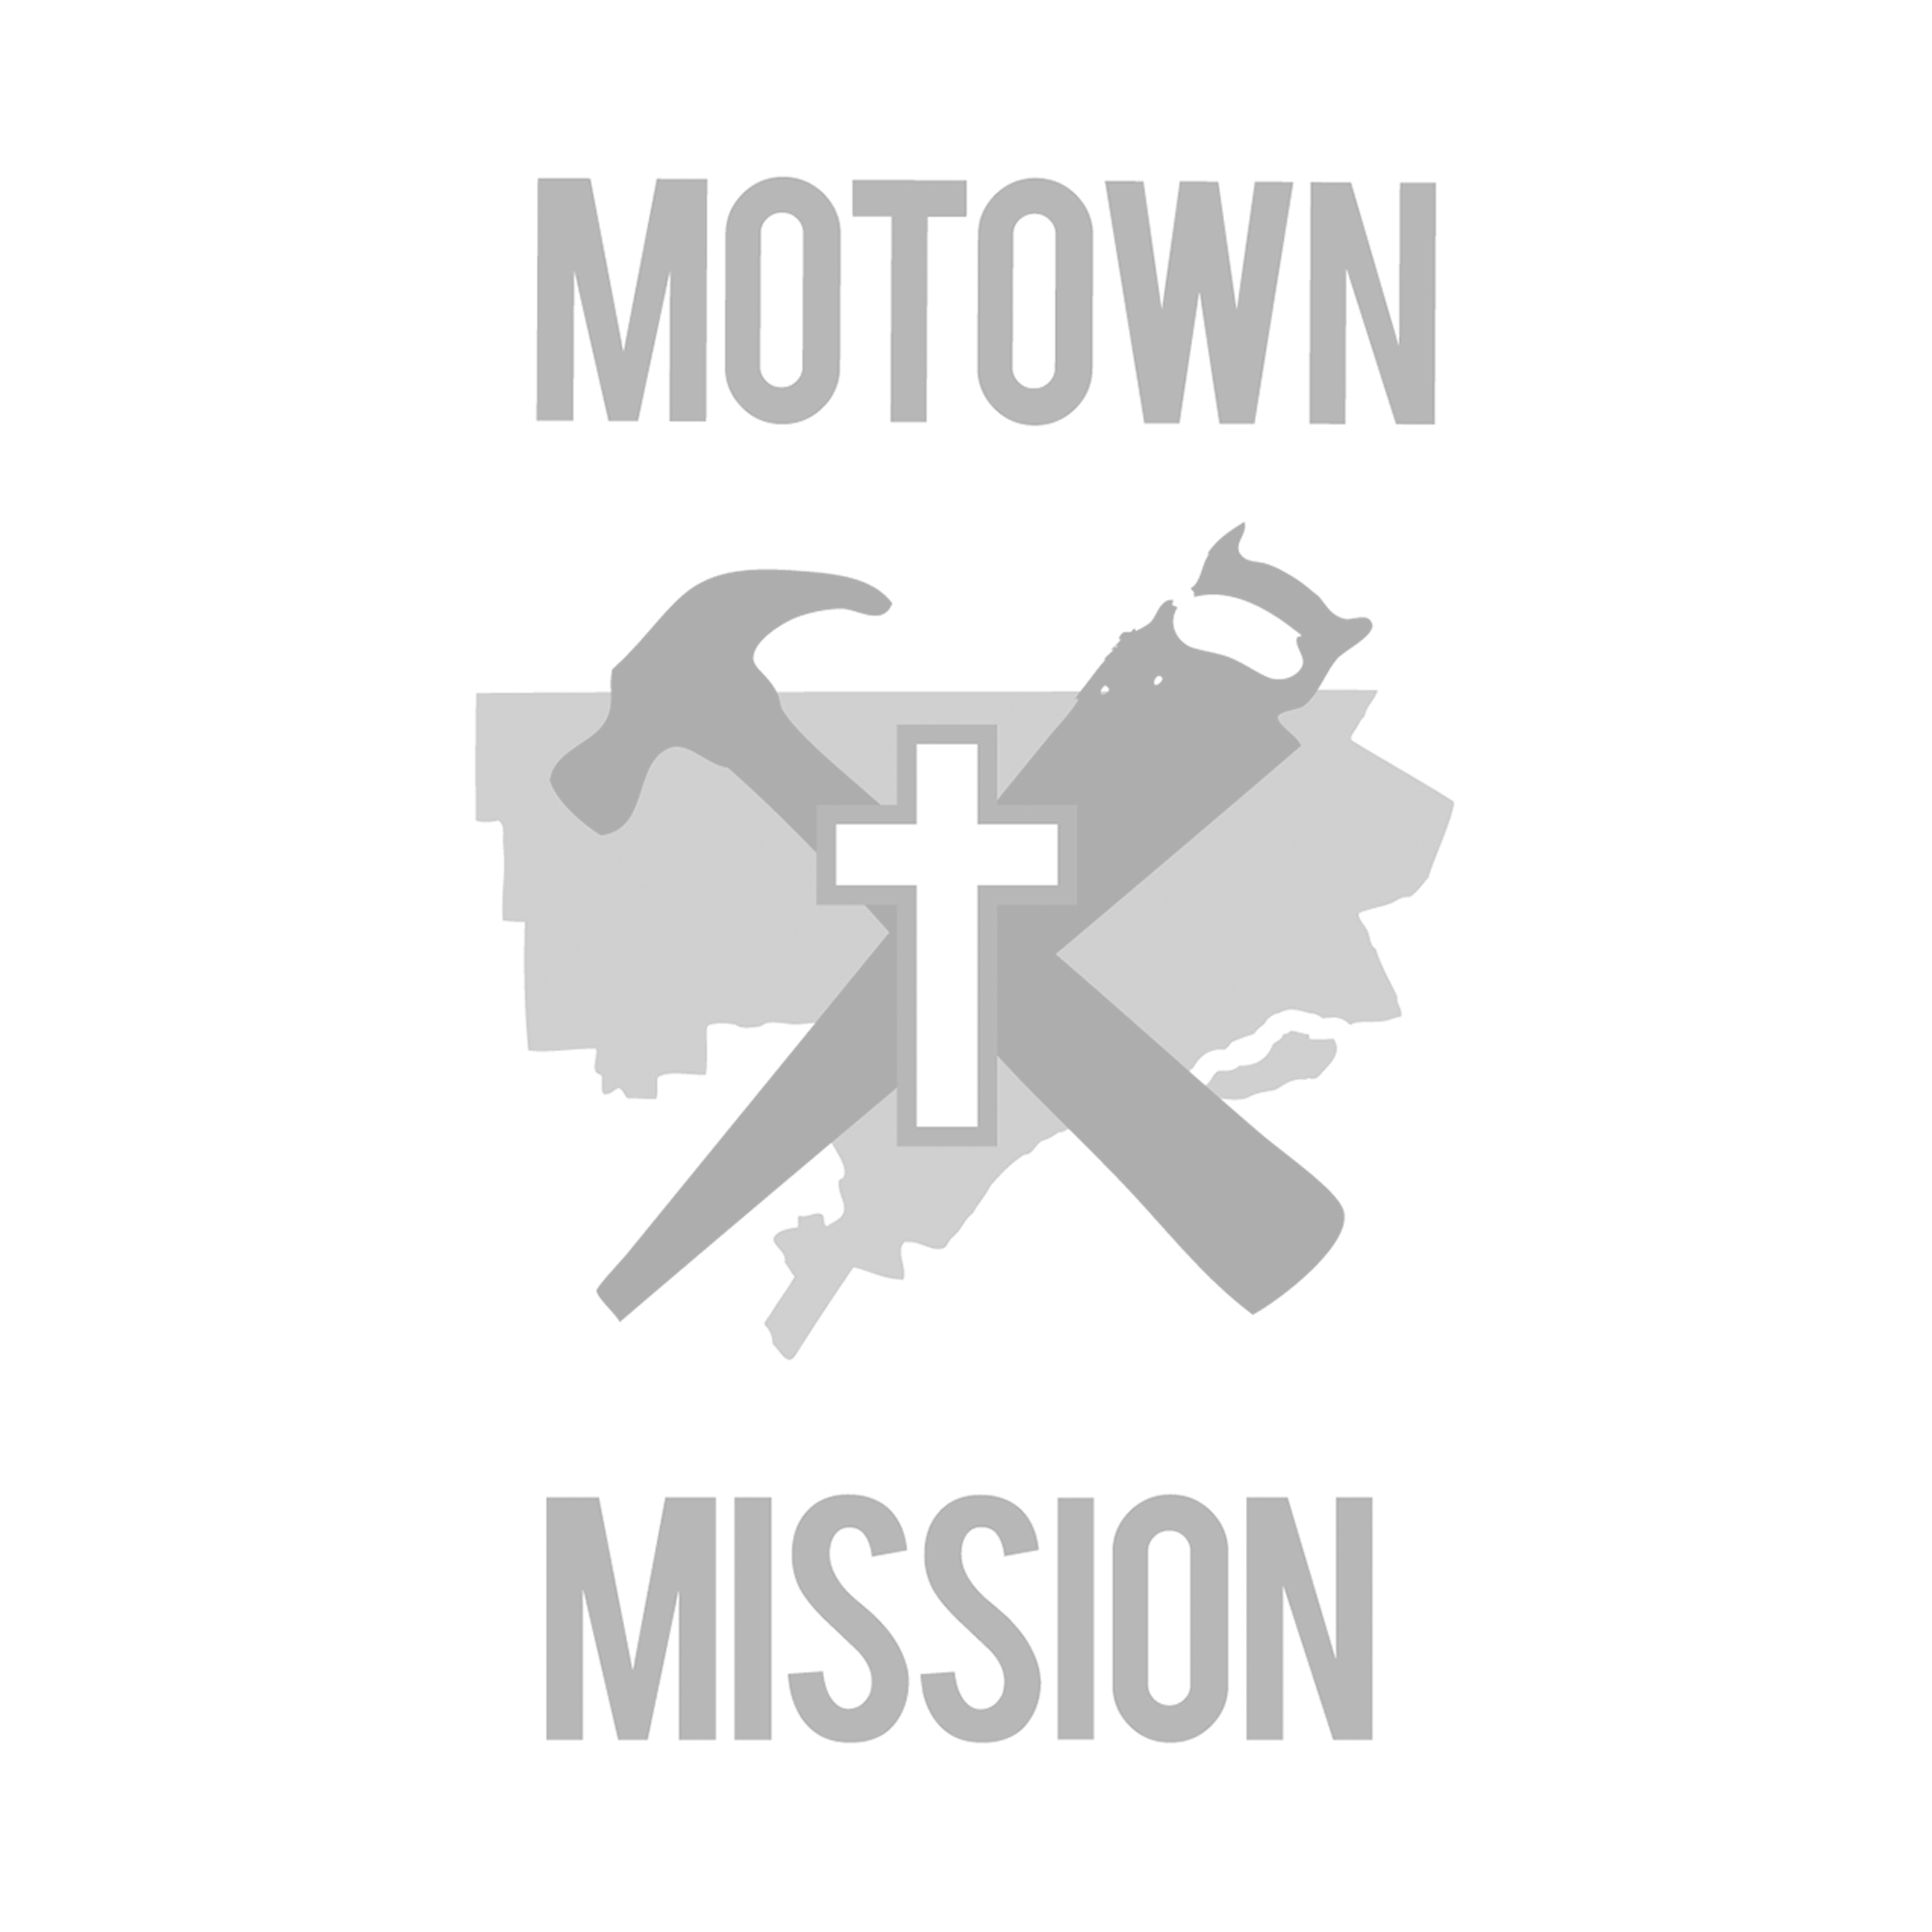 Motown Mission